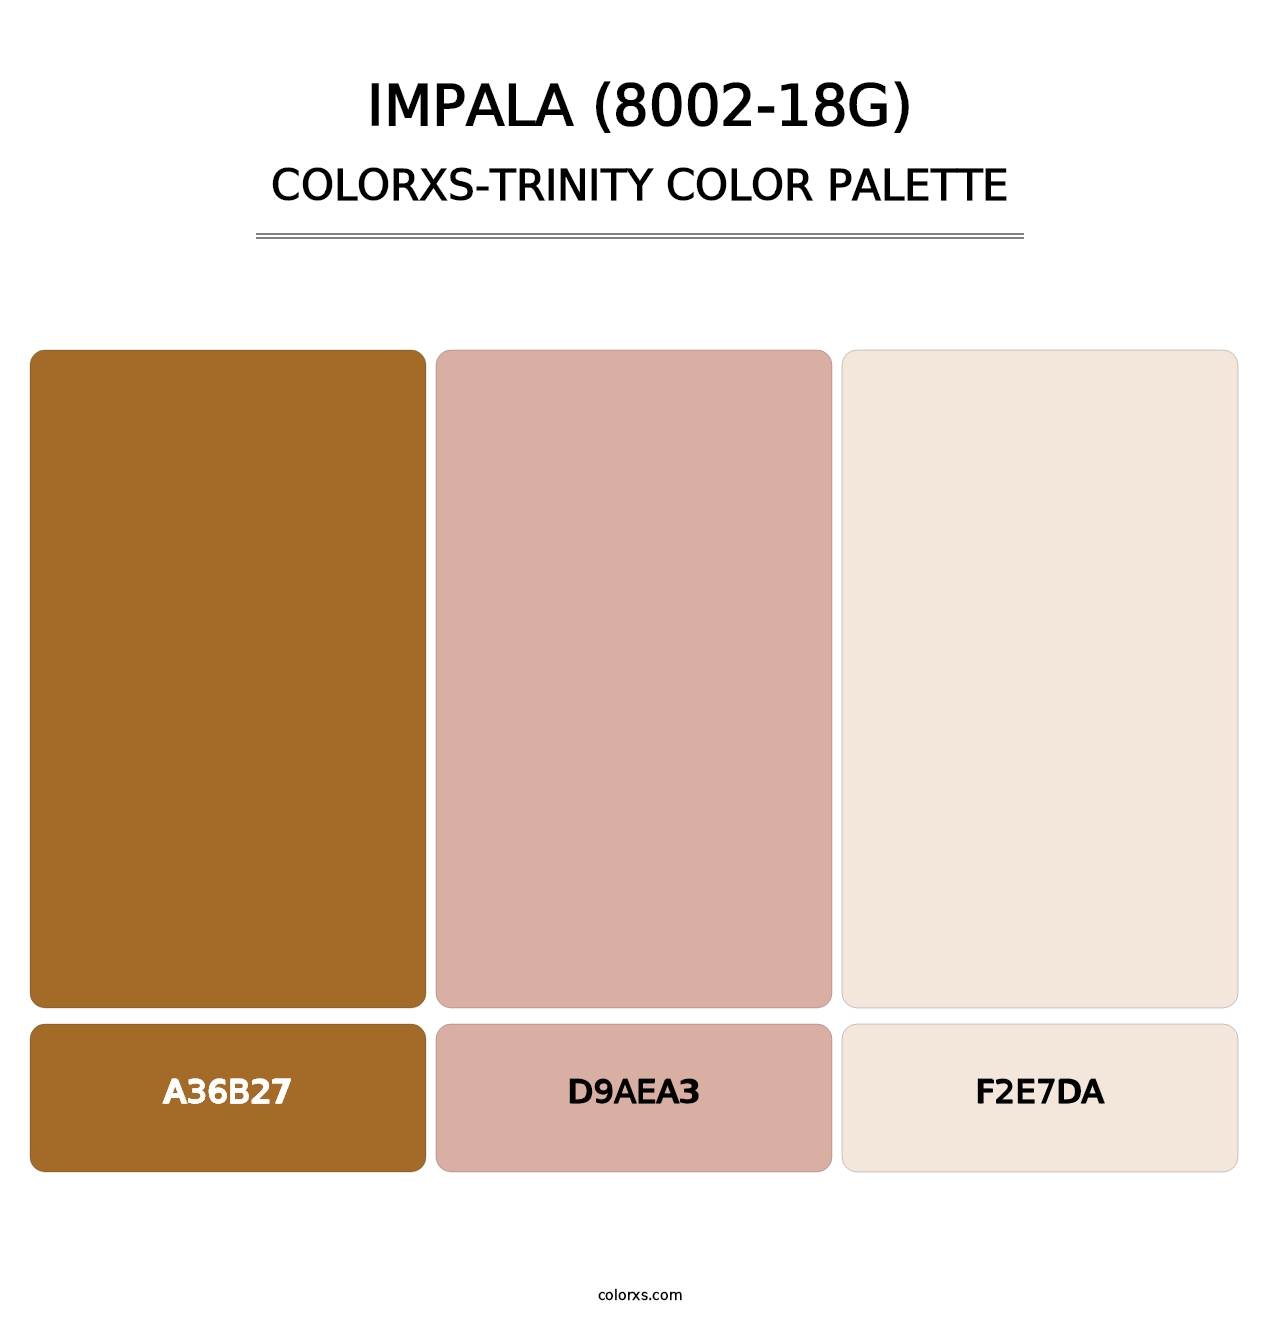 Impala (8002-18G) - Colorxs Trinity Palette